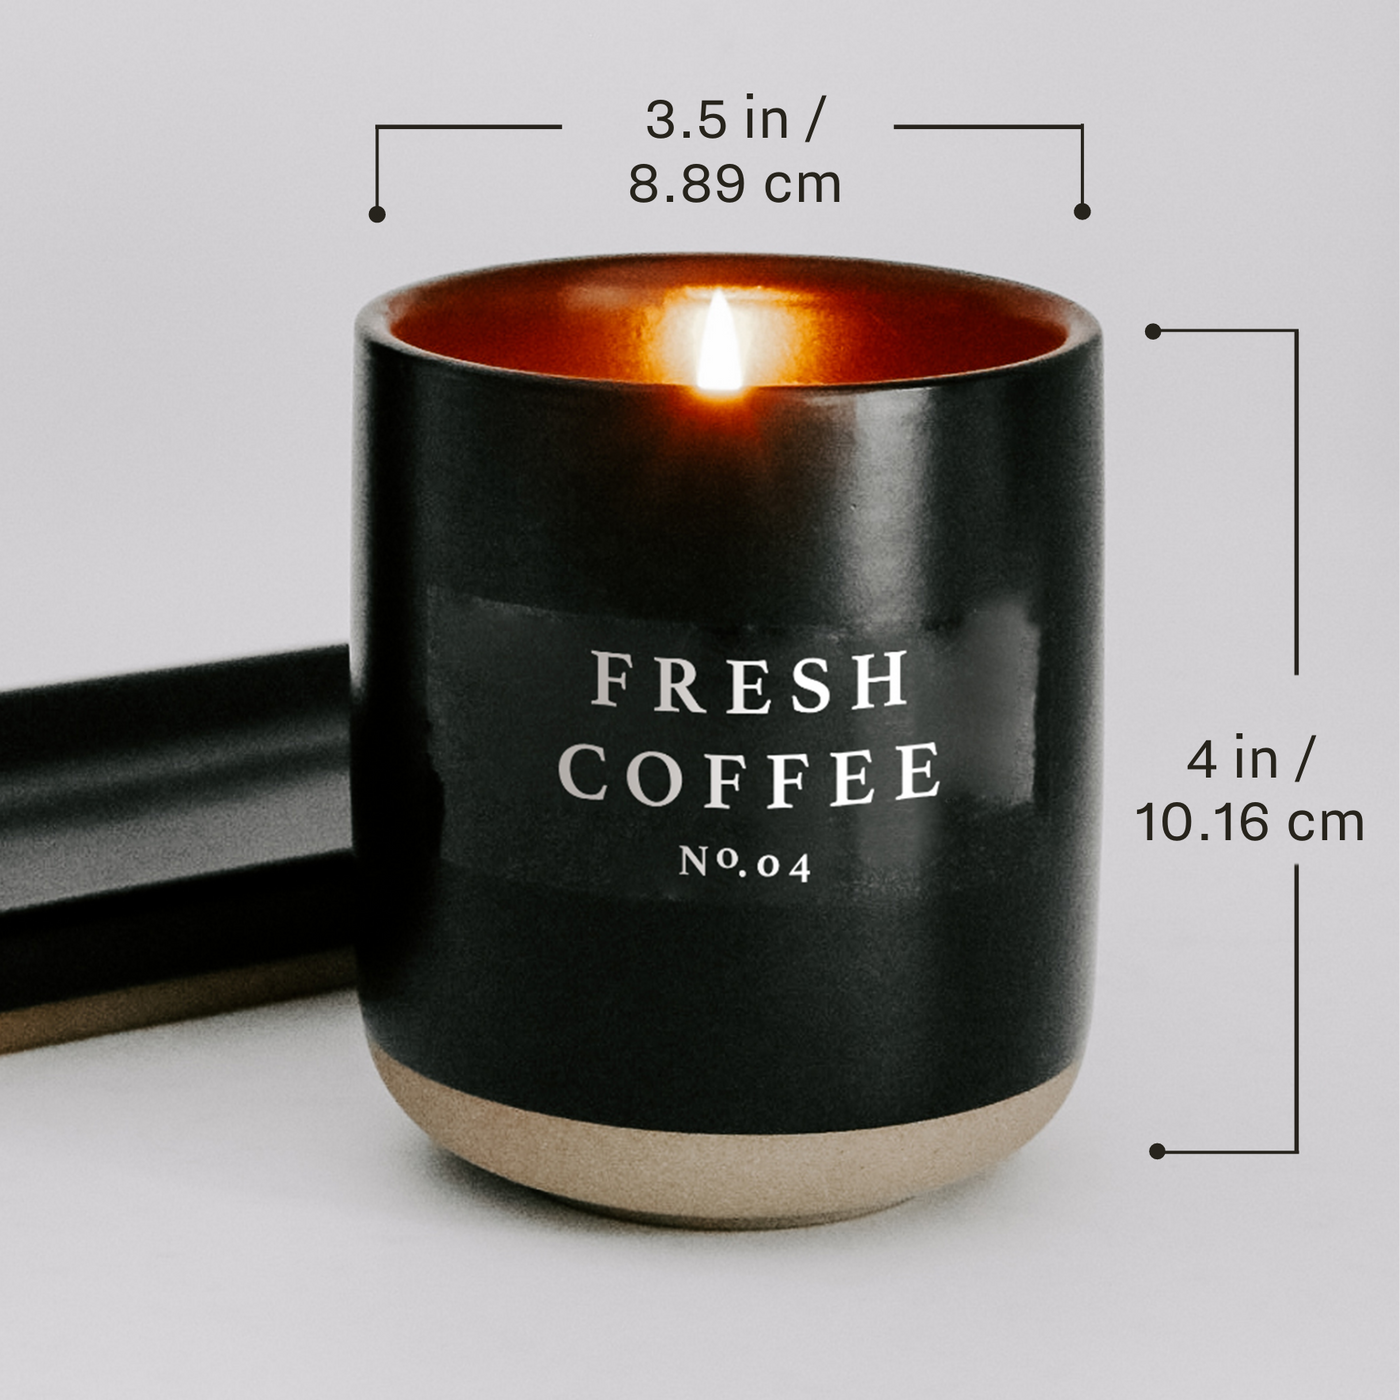 Cozy Season Soy Candle - Black Stoneware Jar - 12 oz